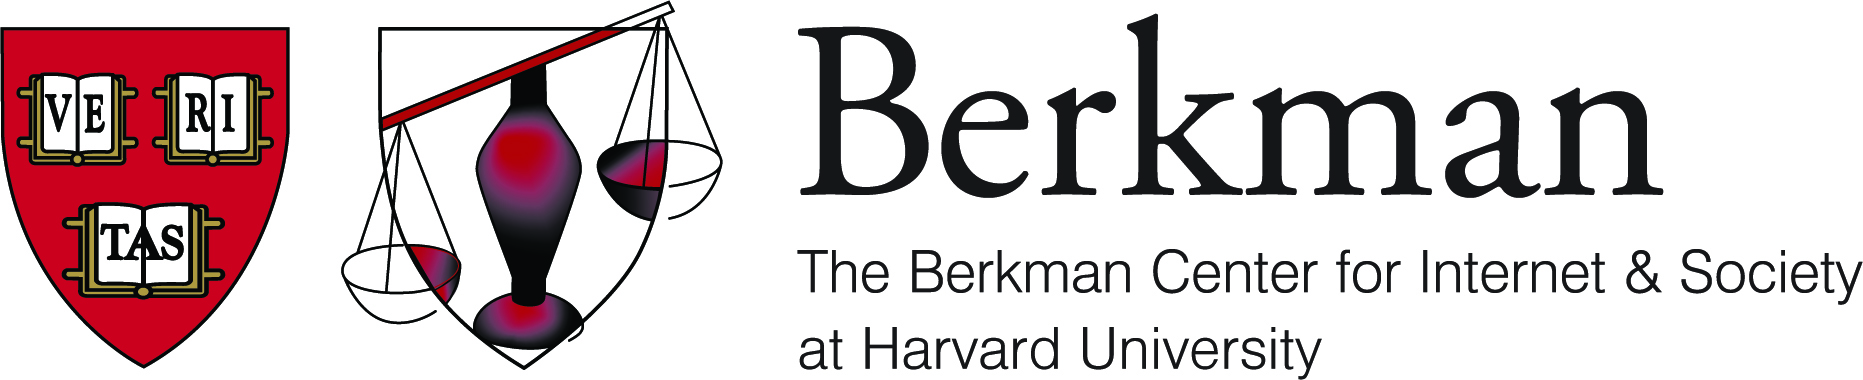 berkman Harvard University